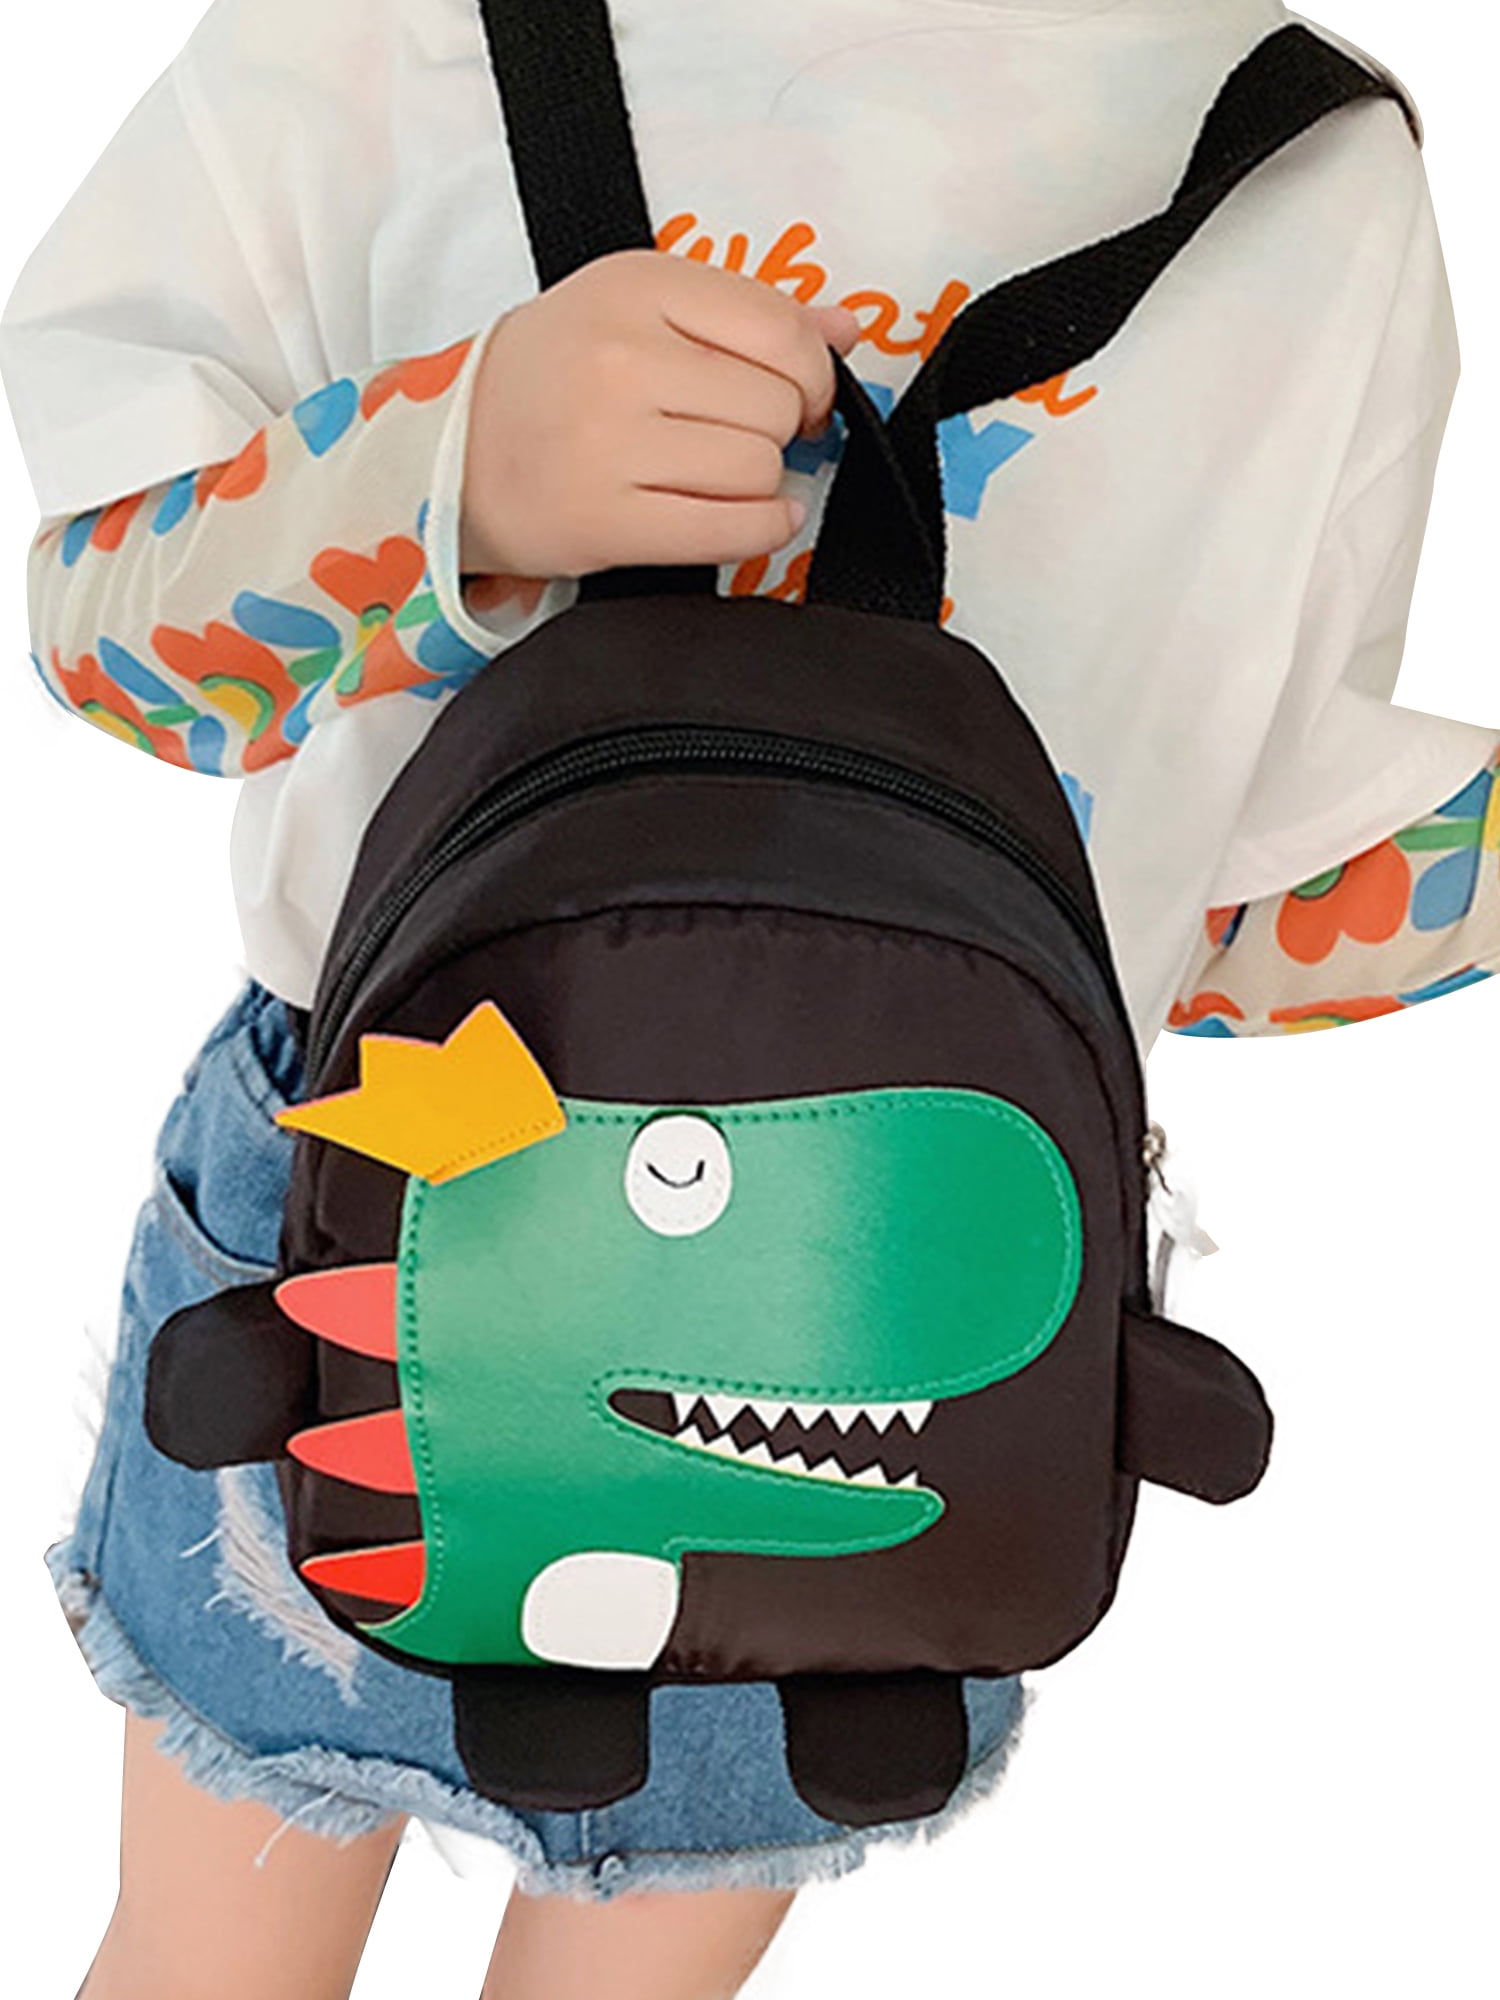 Crocs Kids Boy's Backpack School Bag Orange Gray pre school Dinosaur 